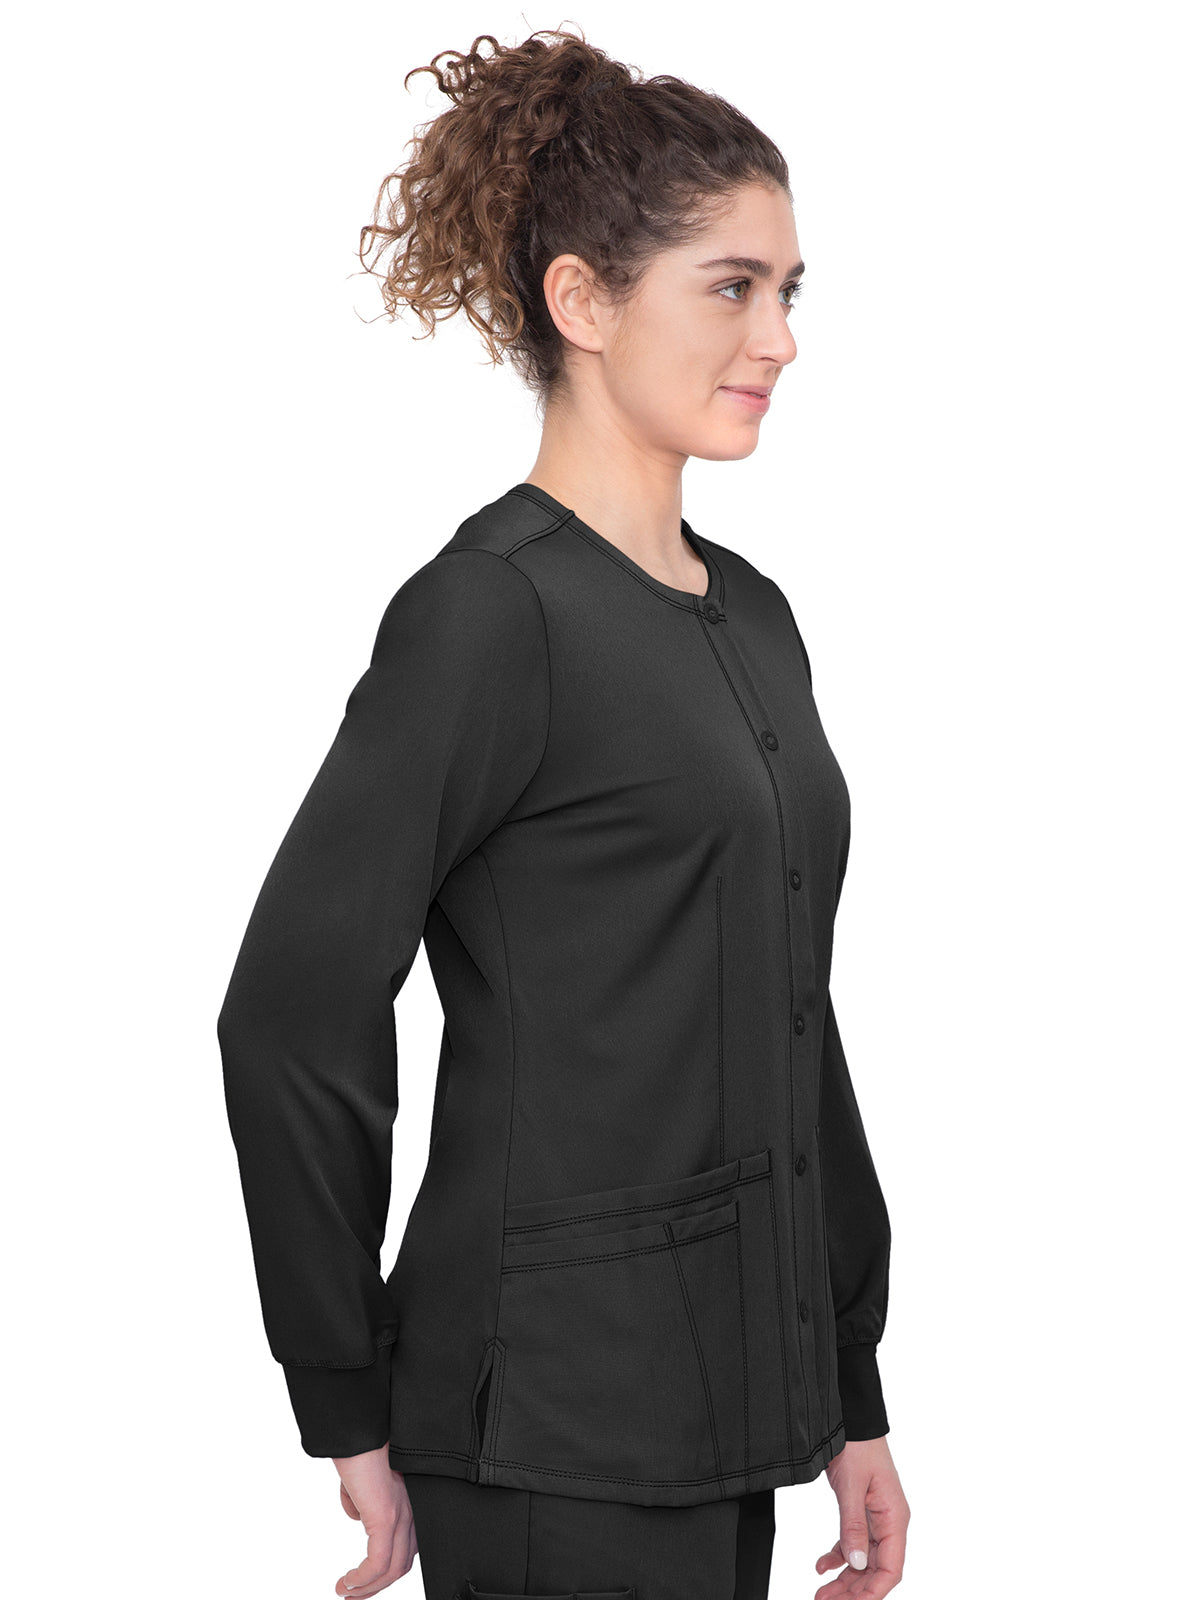 Women's Snap Front Scrub Jacket - 5500 - Black